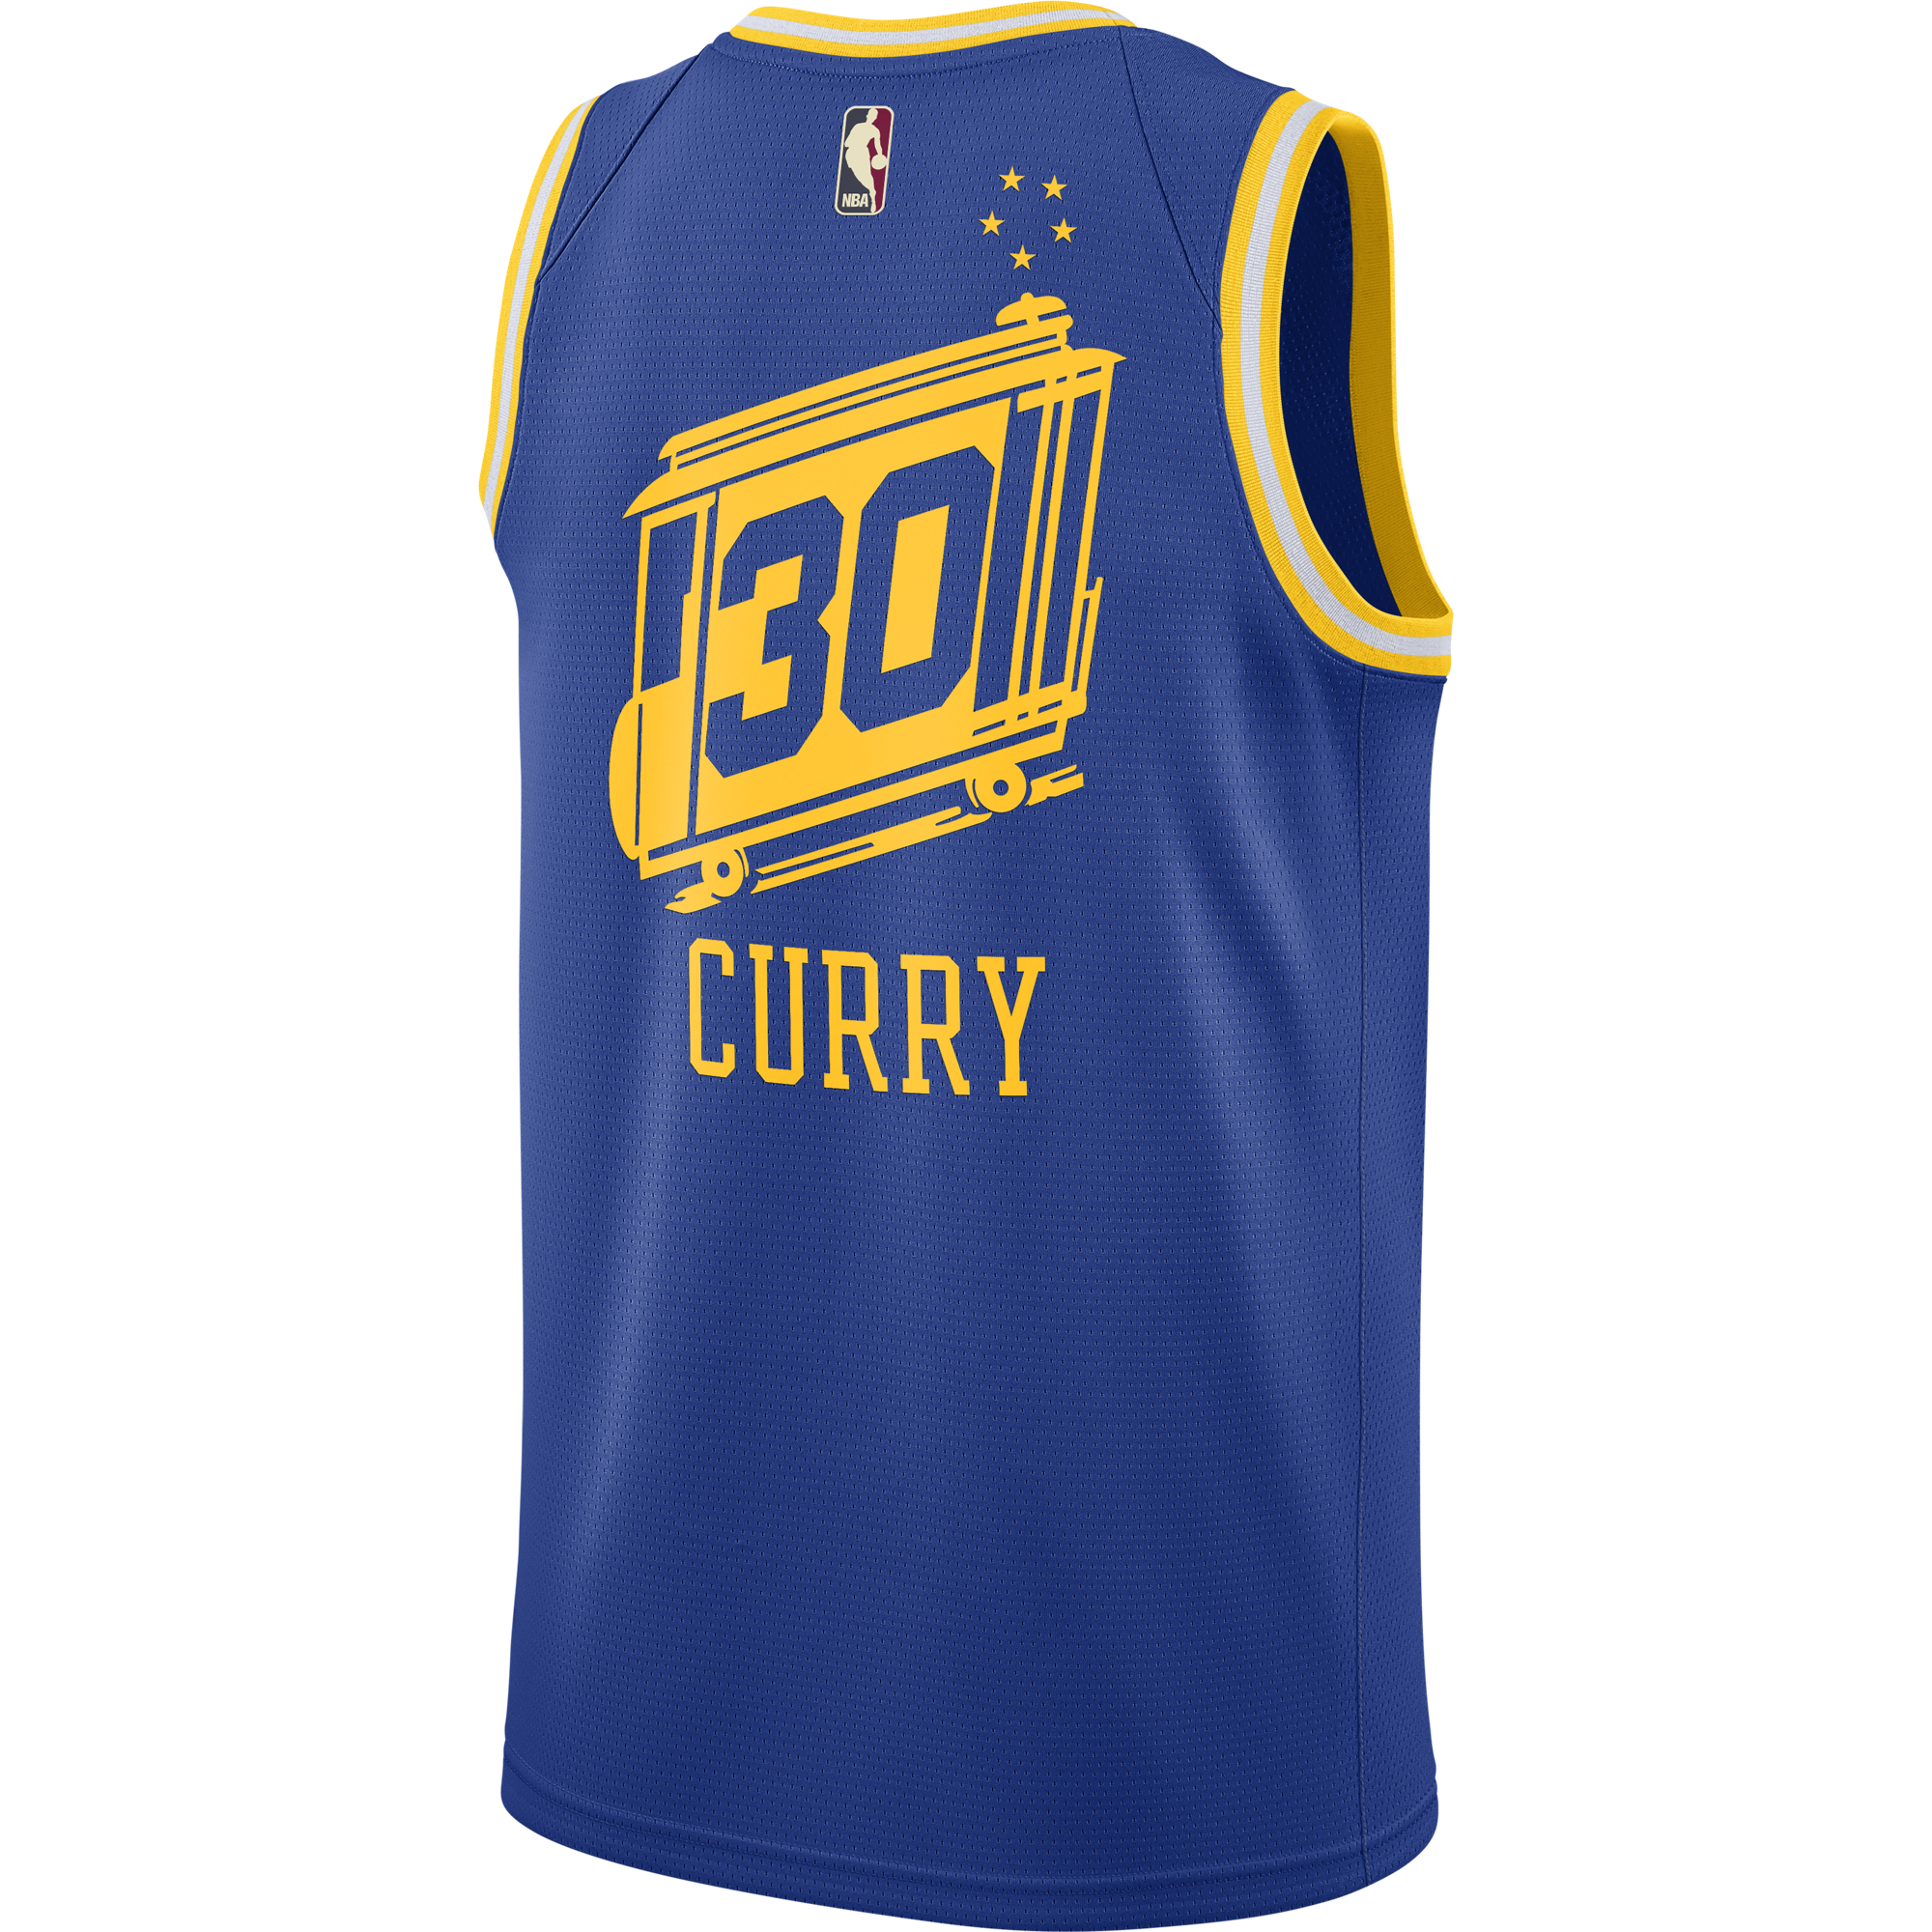 Nike Men's Stephen Curry Golden State Warriors Hardwood Classics Swingman Jersey - White/Blue M